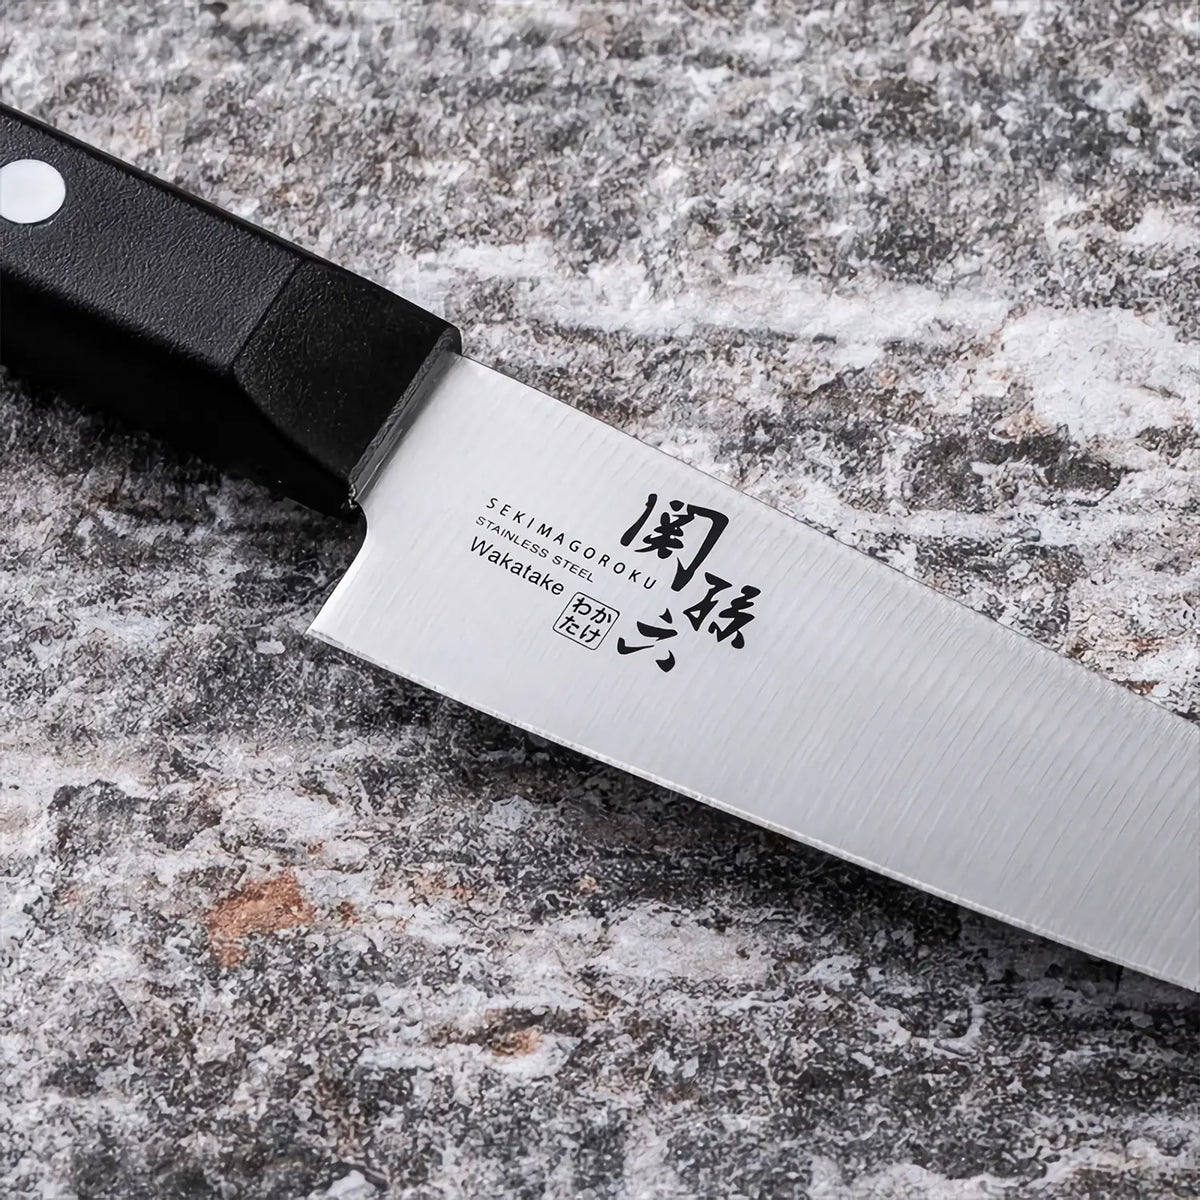 Seki Magoroku Wakatake Stainless Steel Petty Knife